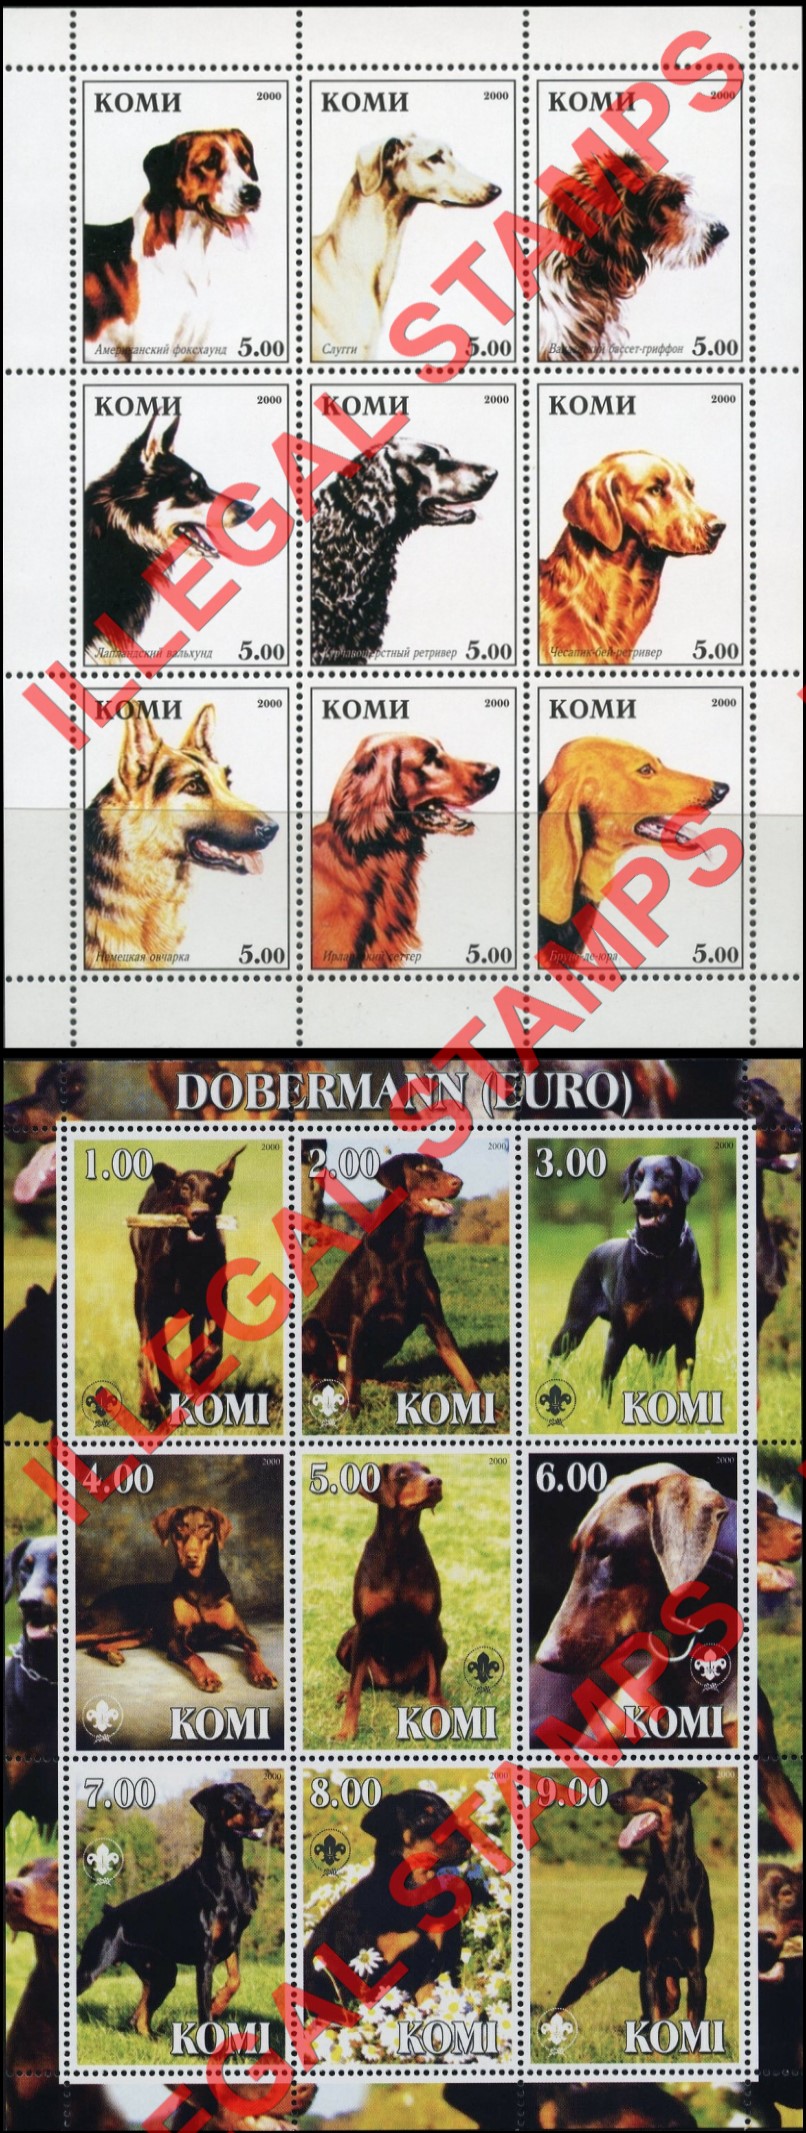 Komi Republic 2000 Counterfeit Illegal Stamps (Part 2)